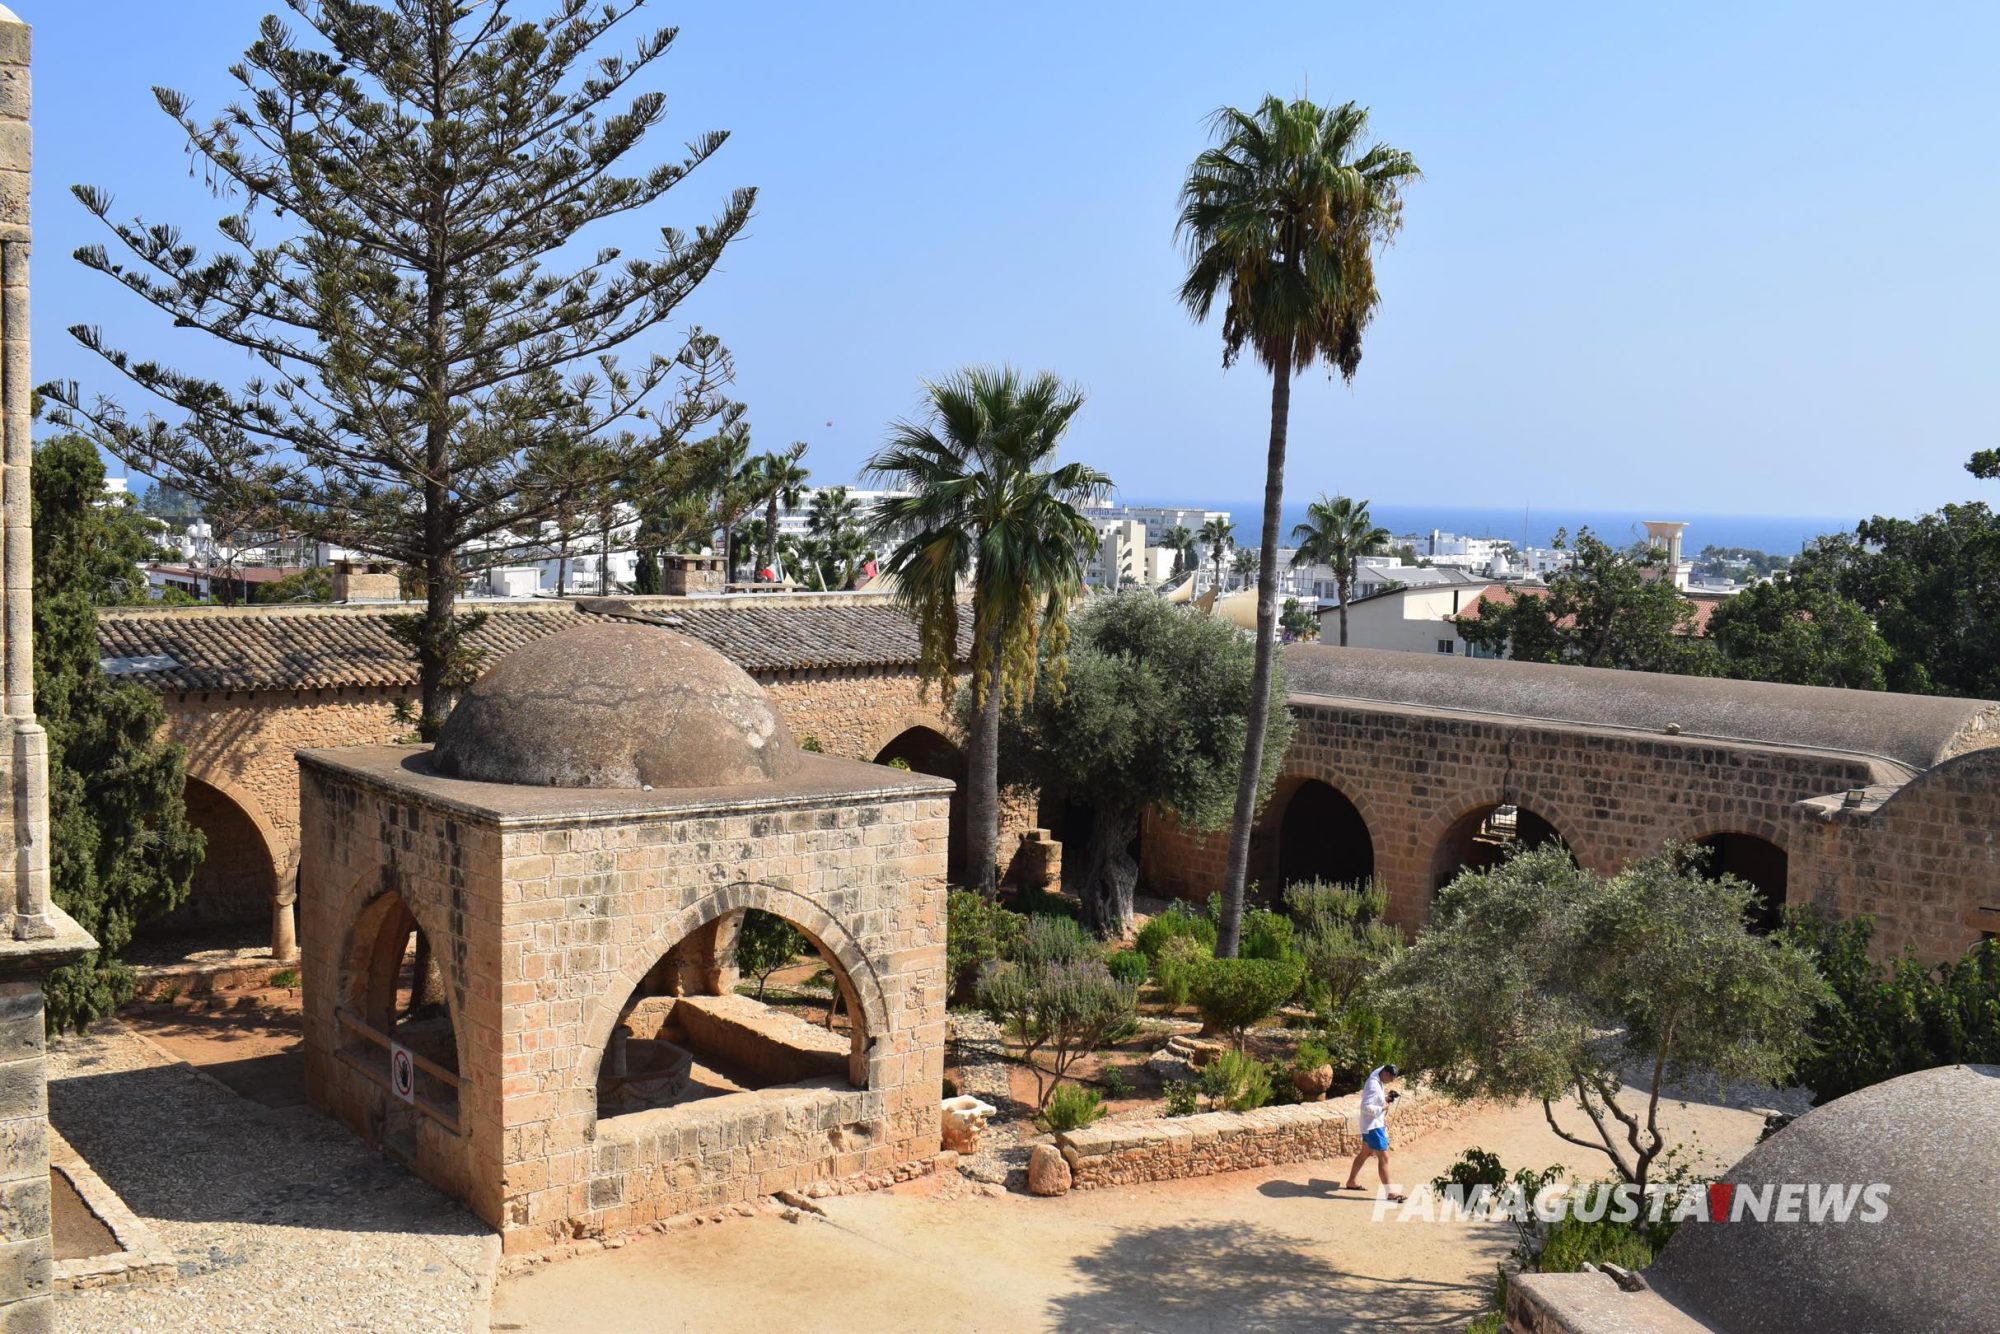 MONASTERY3 ayianapa, exclusive, Famagusta, Yiannis Karousos, Municipality of Agia Napa, Medieval Monastery of Agia Napa, Nea Famagusta